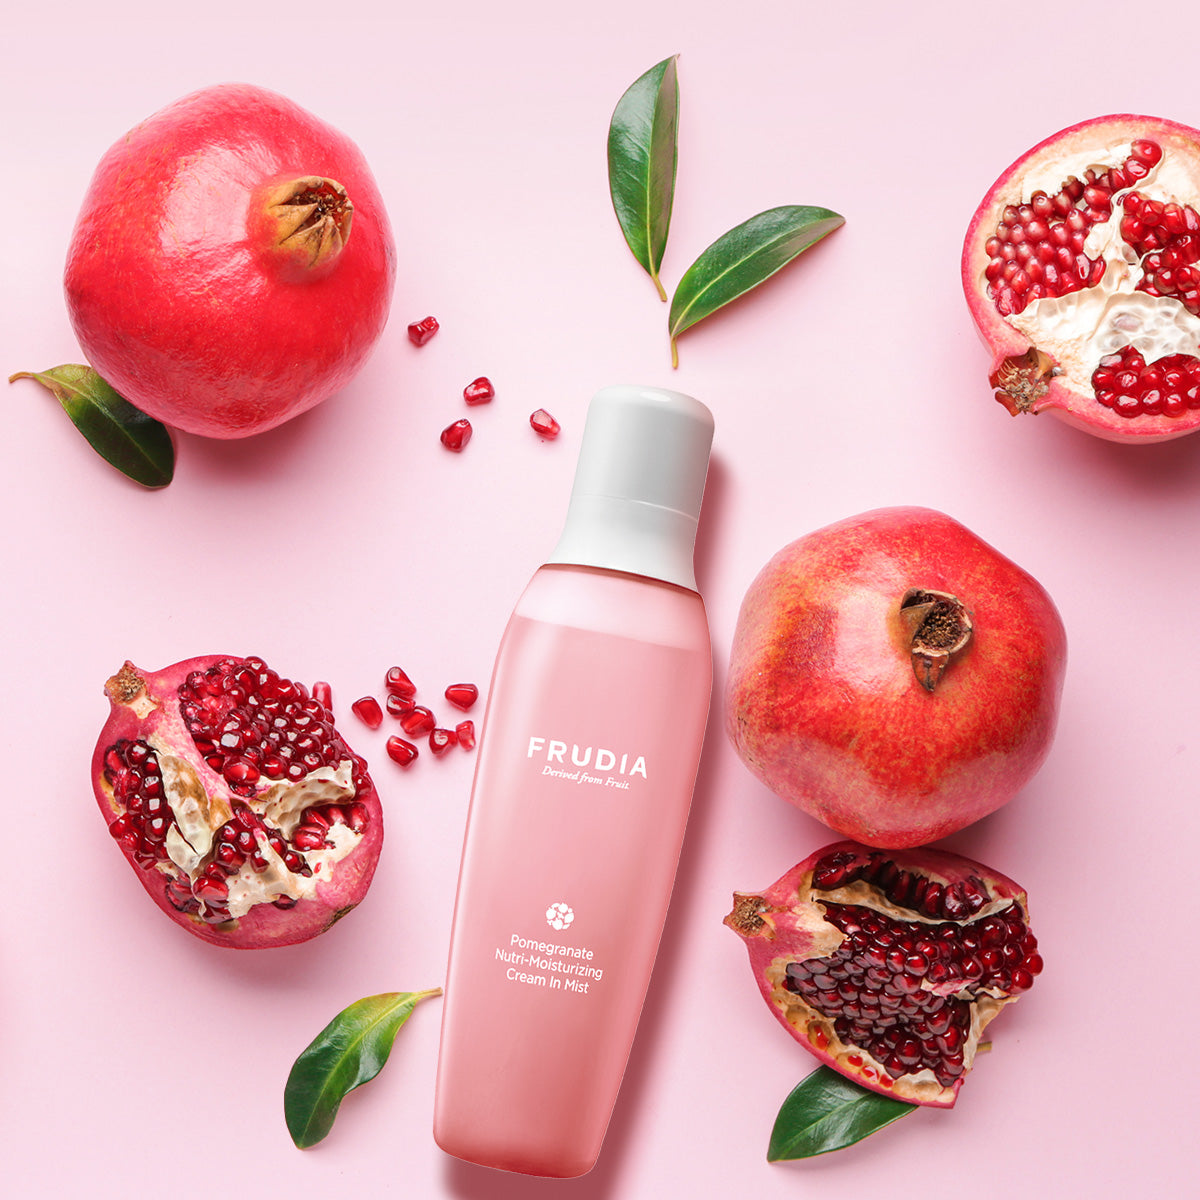 Pomegranate Nutri-Moisturizing Cream In Mist Frudia